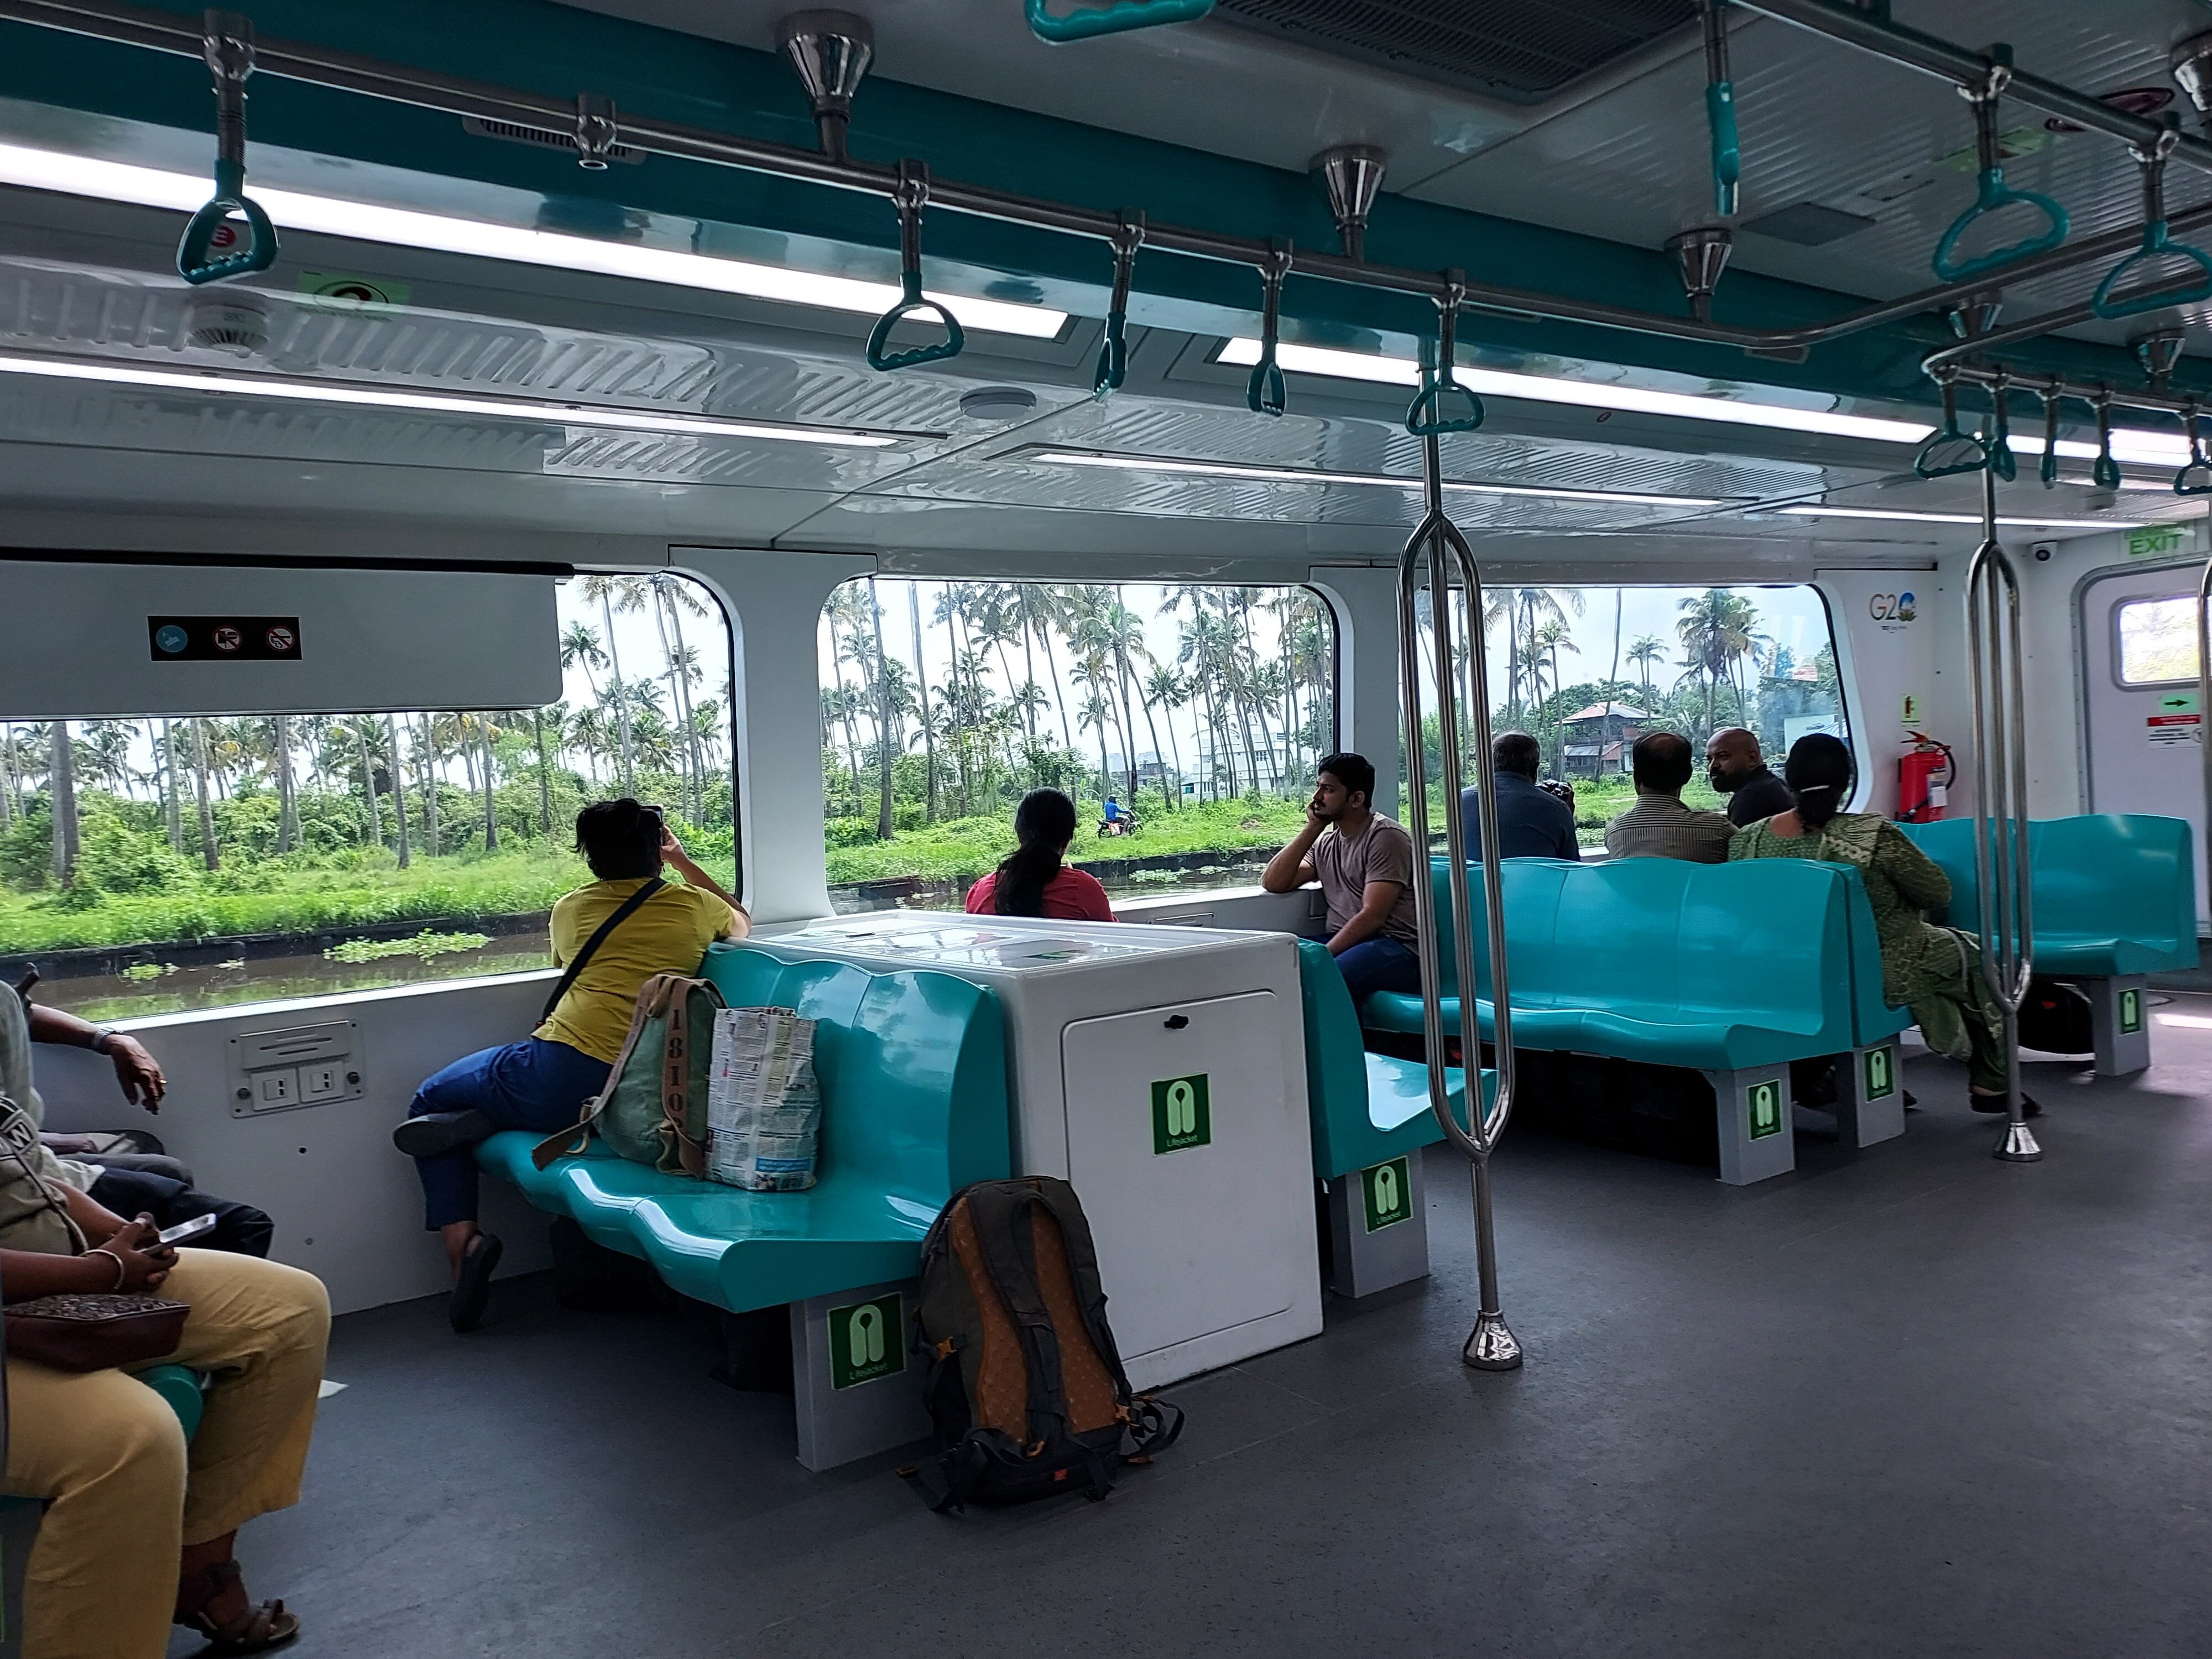 Kochi Water Metro